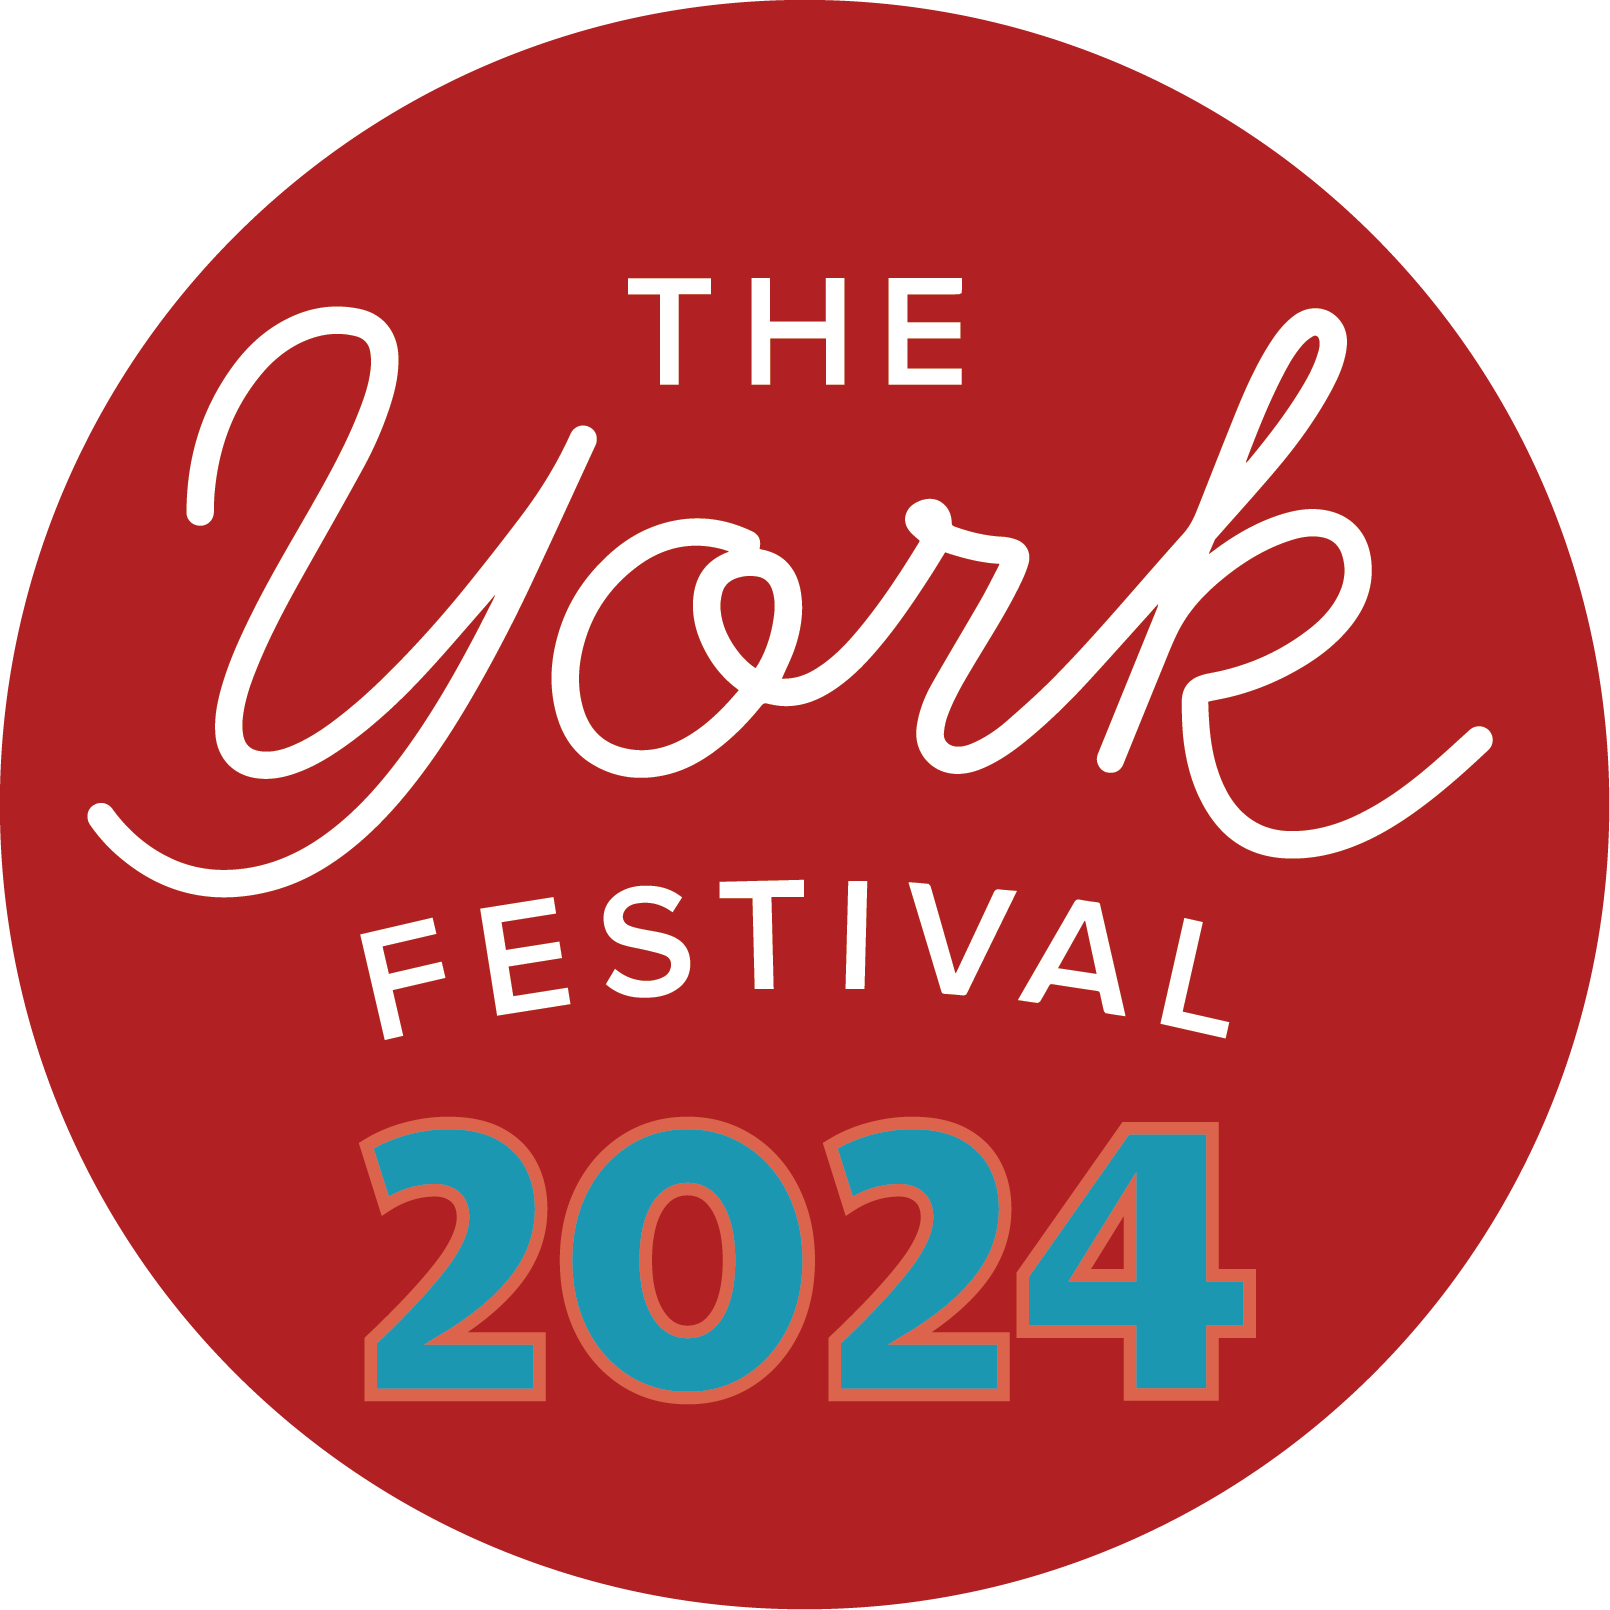 The York Festival logo 2024